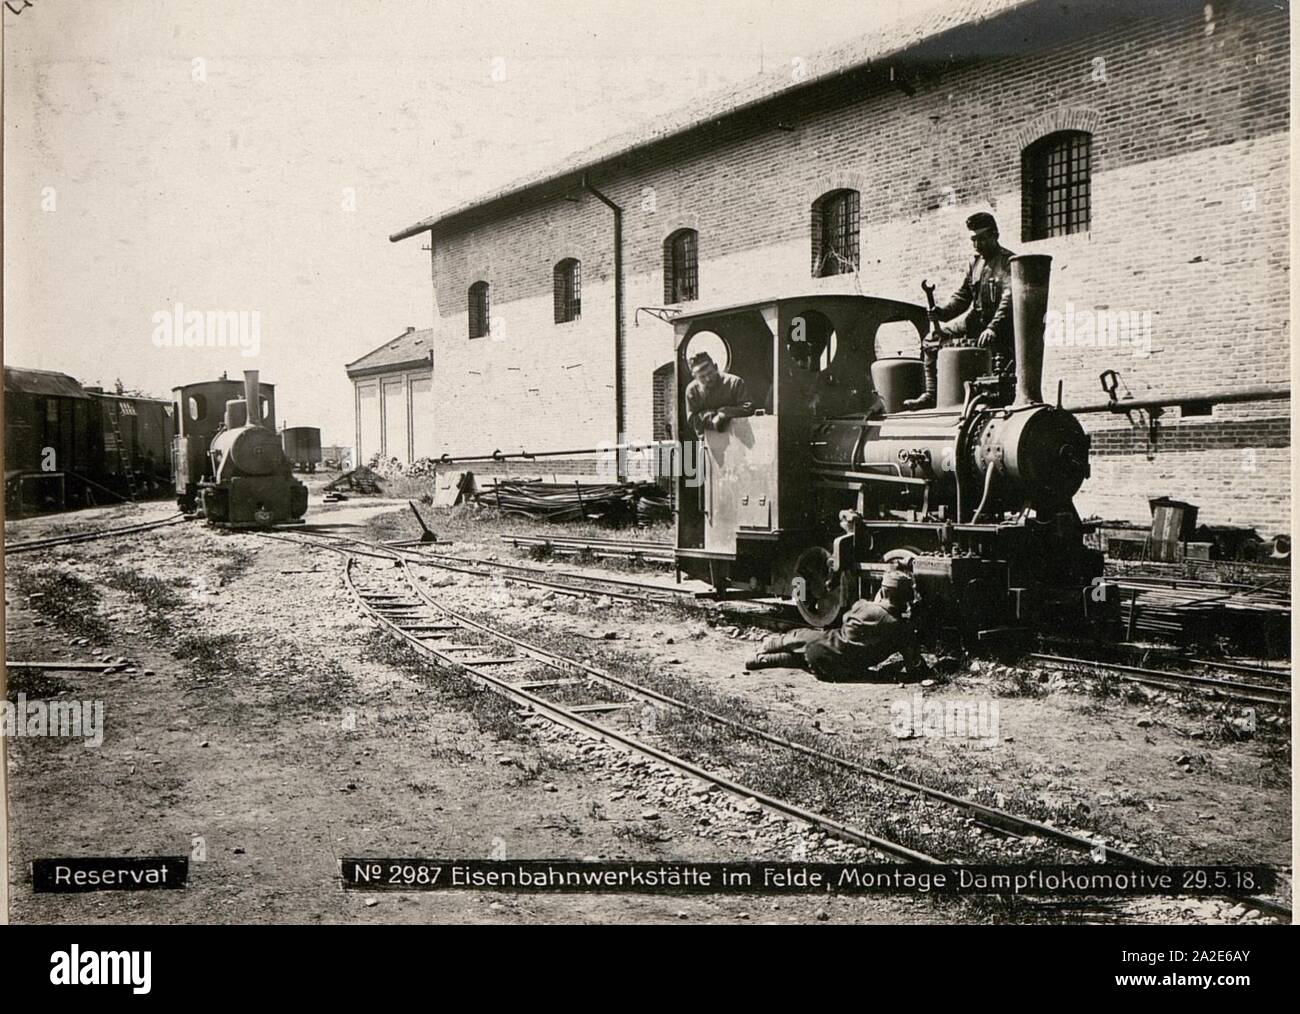 Eisenbahnwerkstätte im Felde, Montage Dampflokomotive am 29.5.1918 Stock Photo